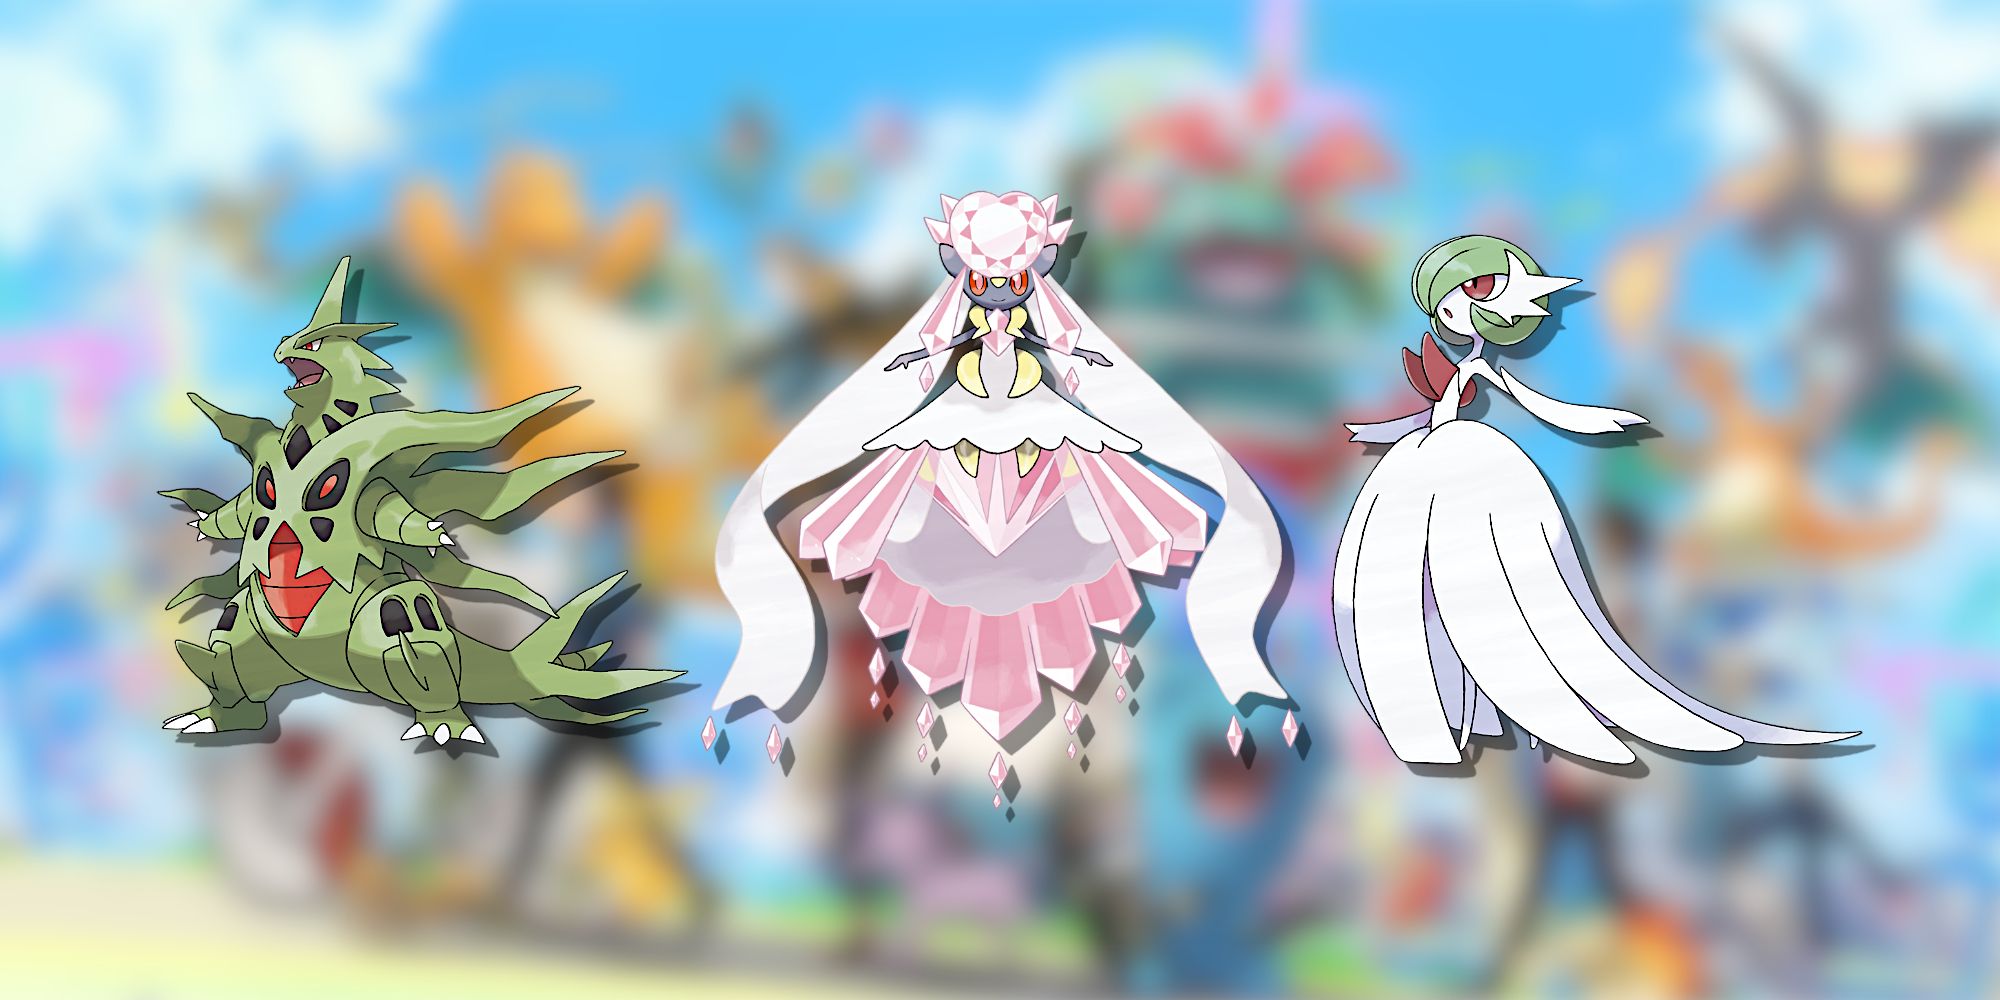 Image of Mega Tyranitar, Mega Diancie, and Mega Gardevoir from Pokemon GO